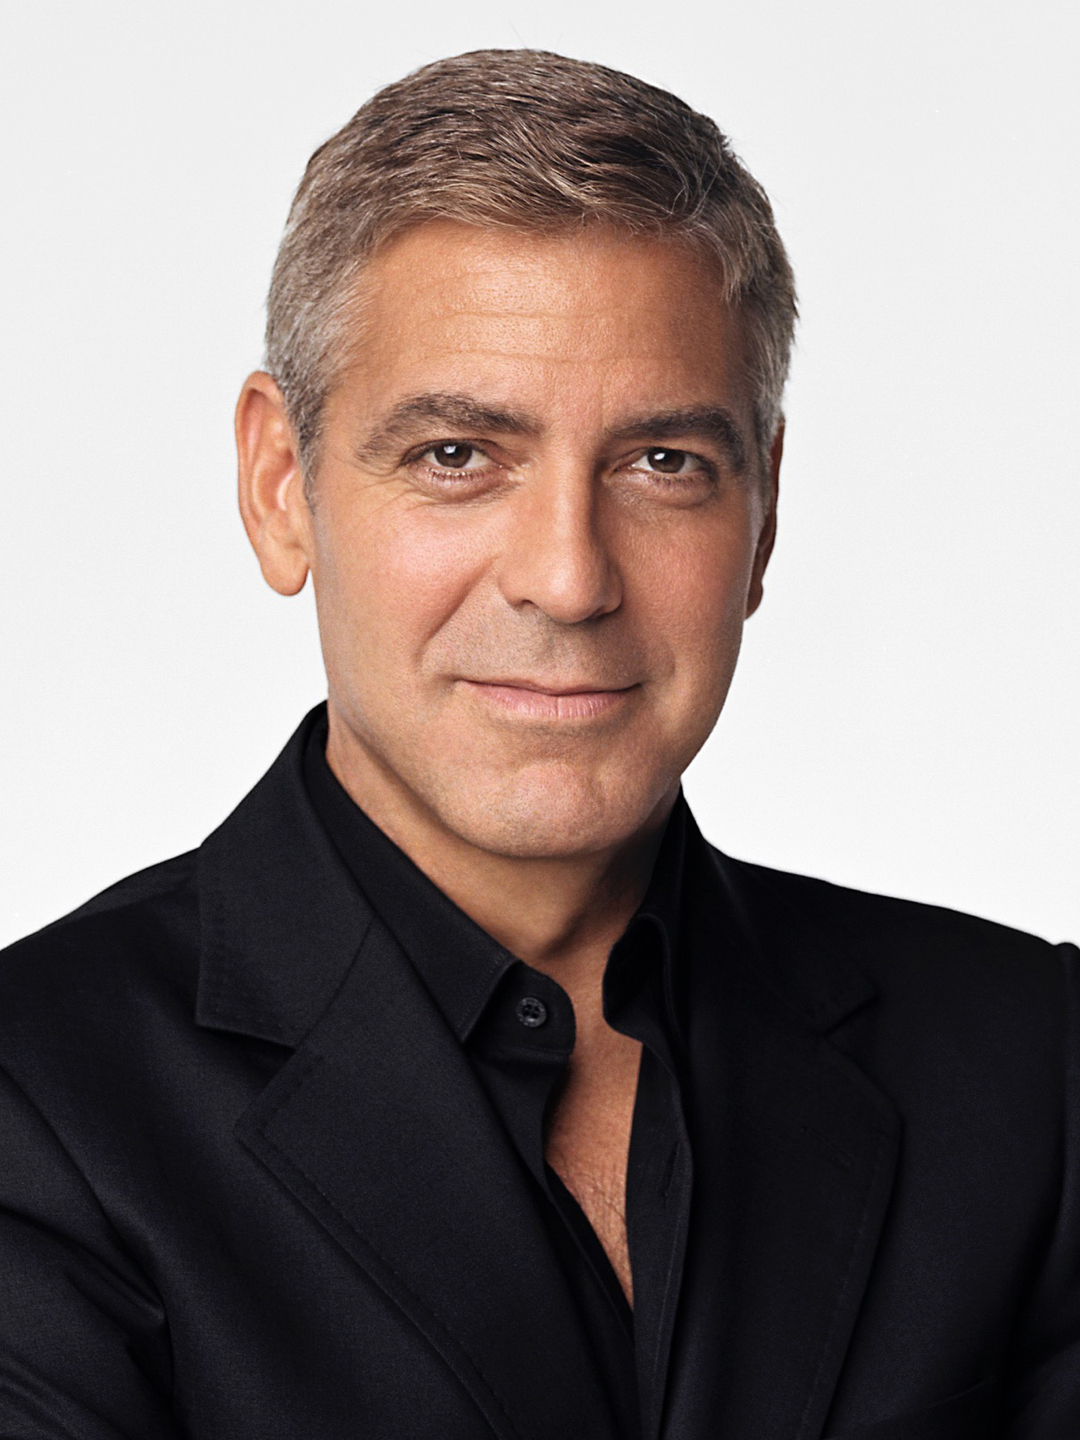 George Clooney chinese horoscope